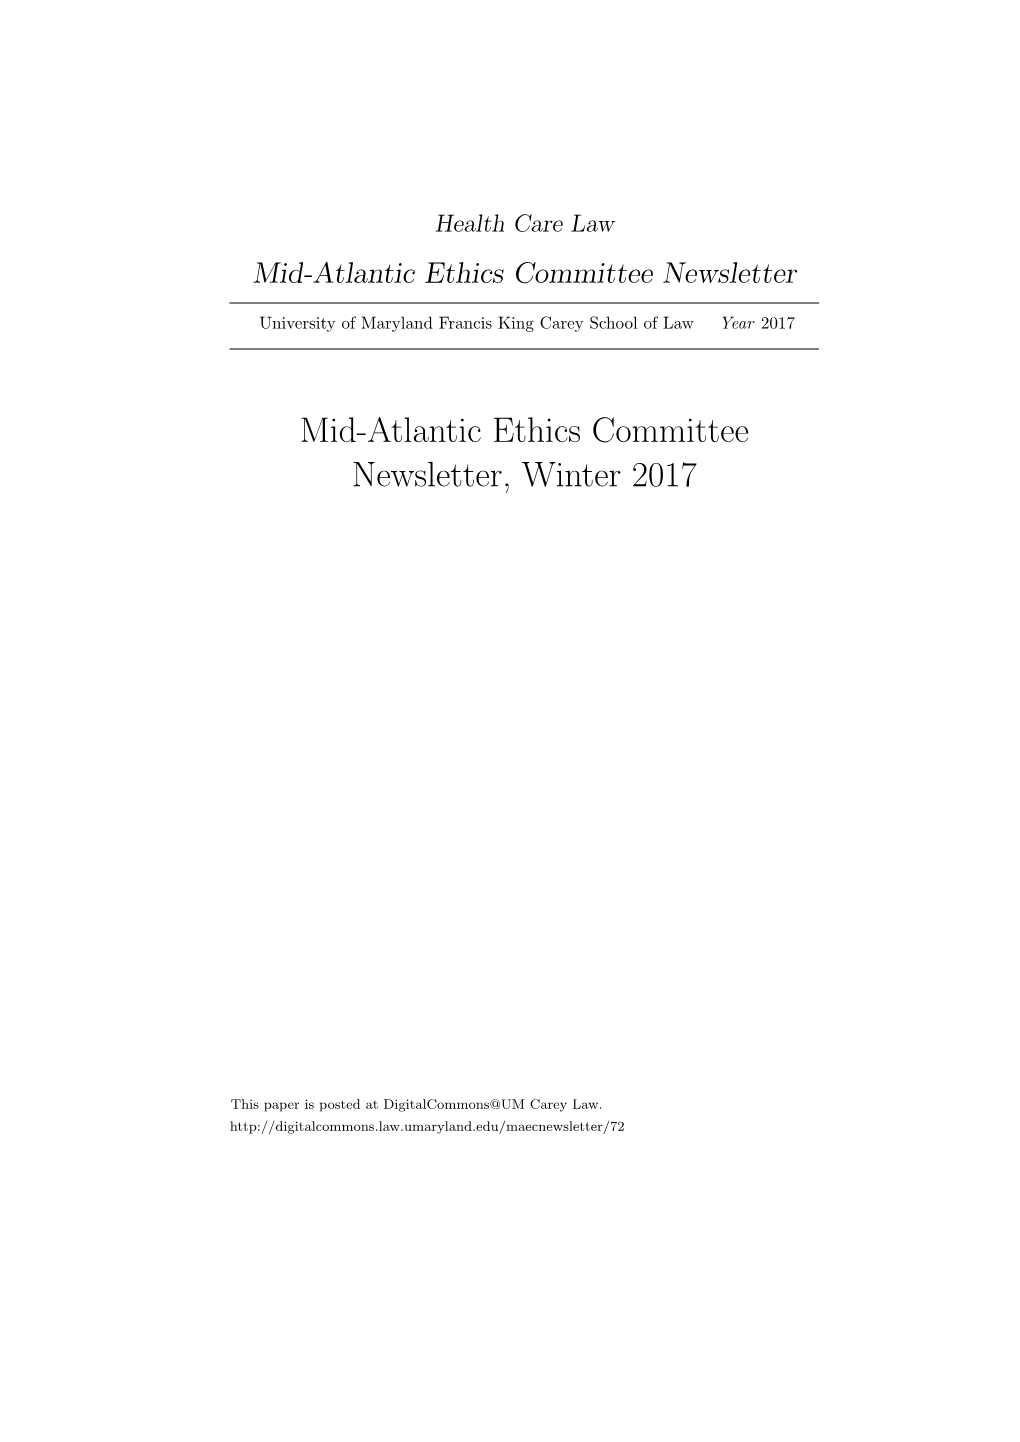 Mid-Atlantic Ethics Committee Newsletter, Winter 2017